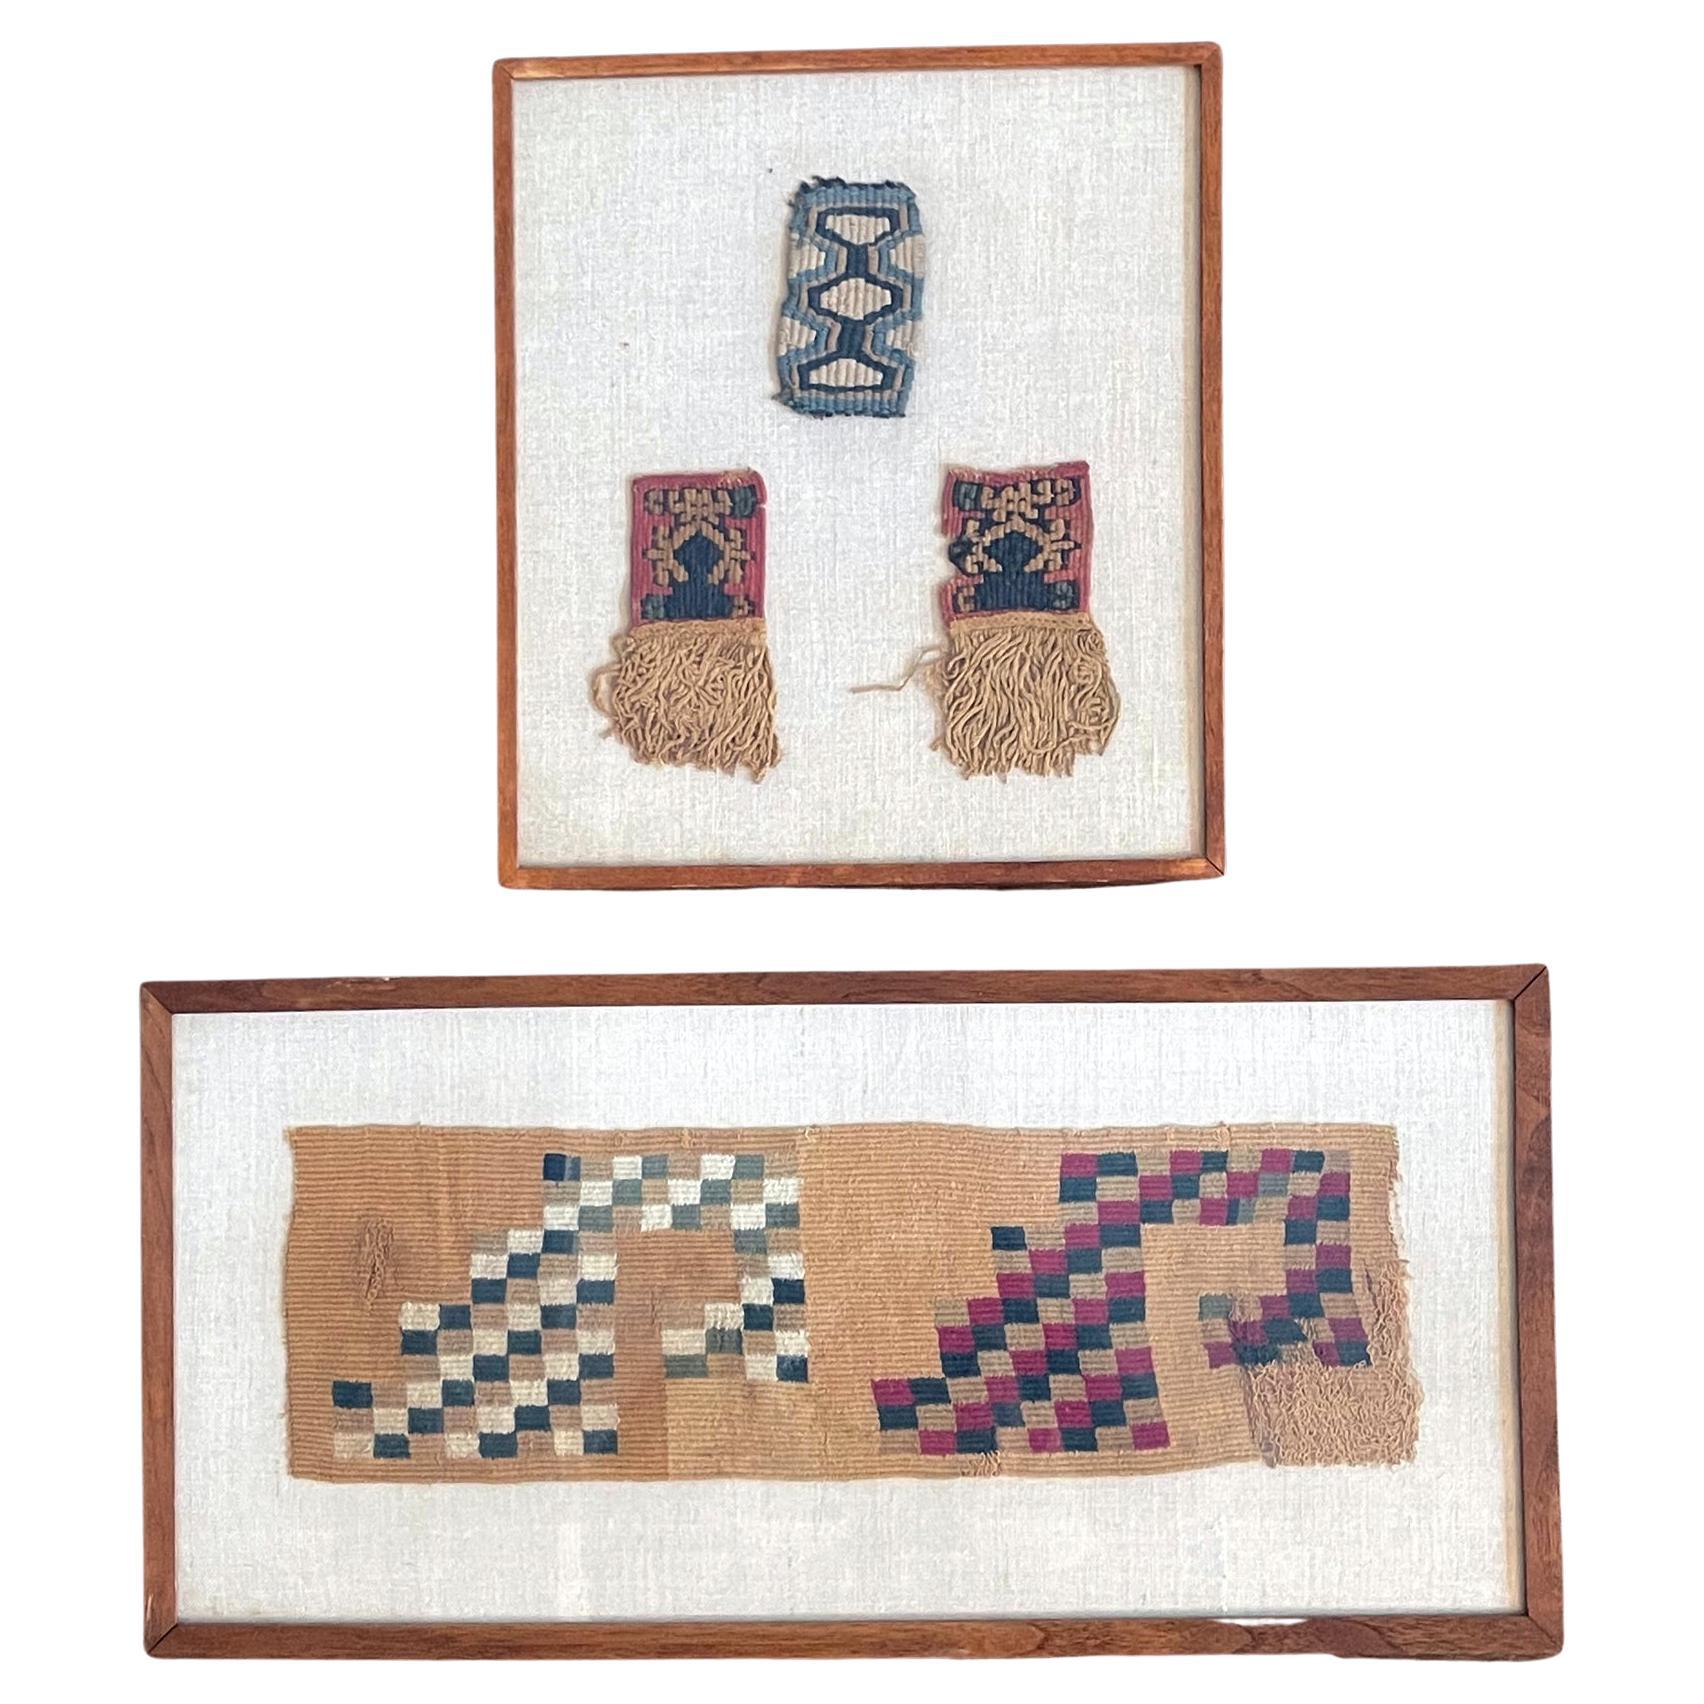 Two Frame Pre-Columbian Woven Textile Fragments Inca Culture Peru